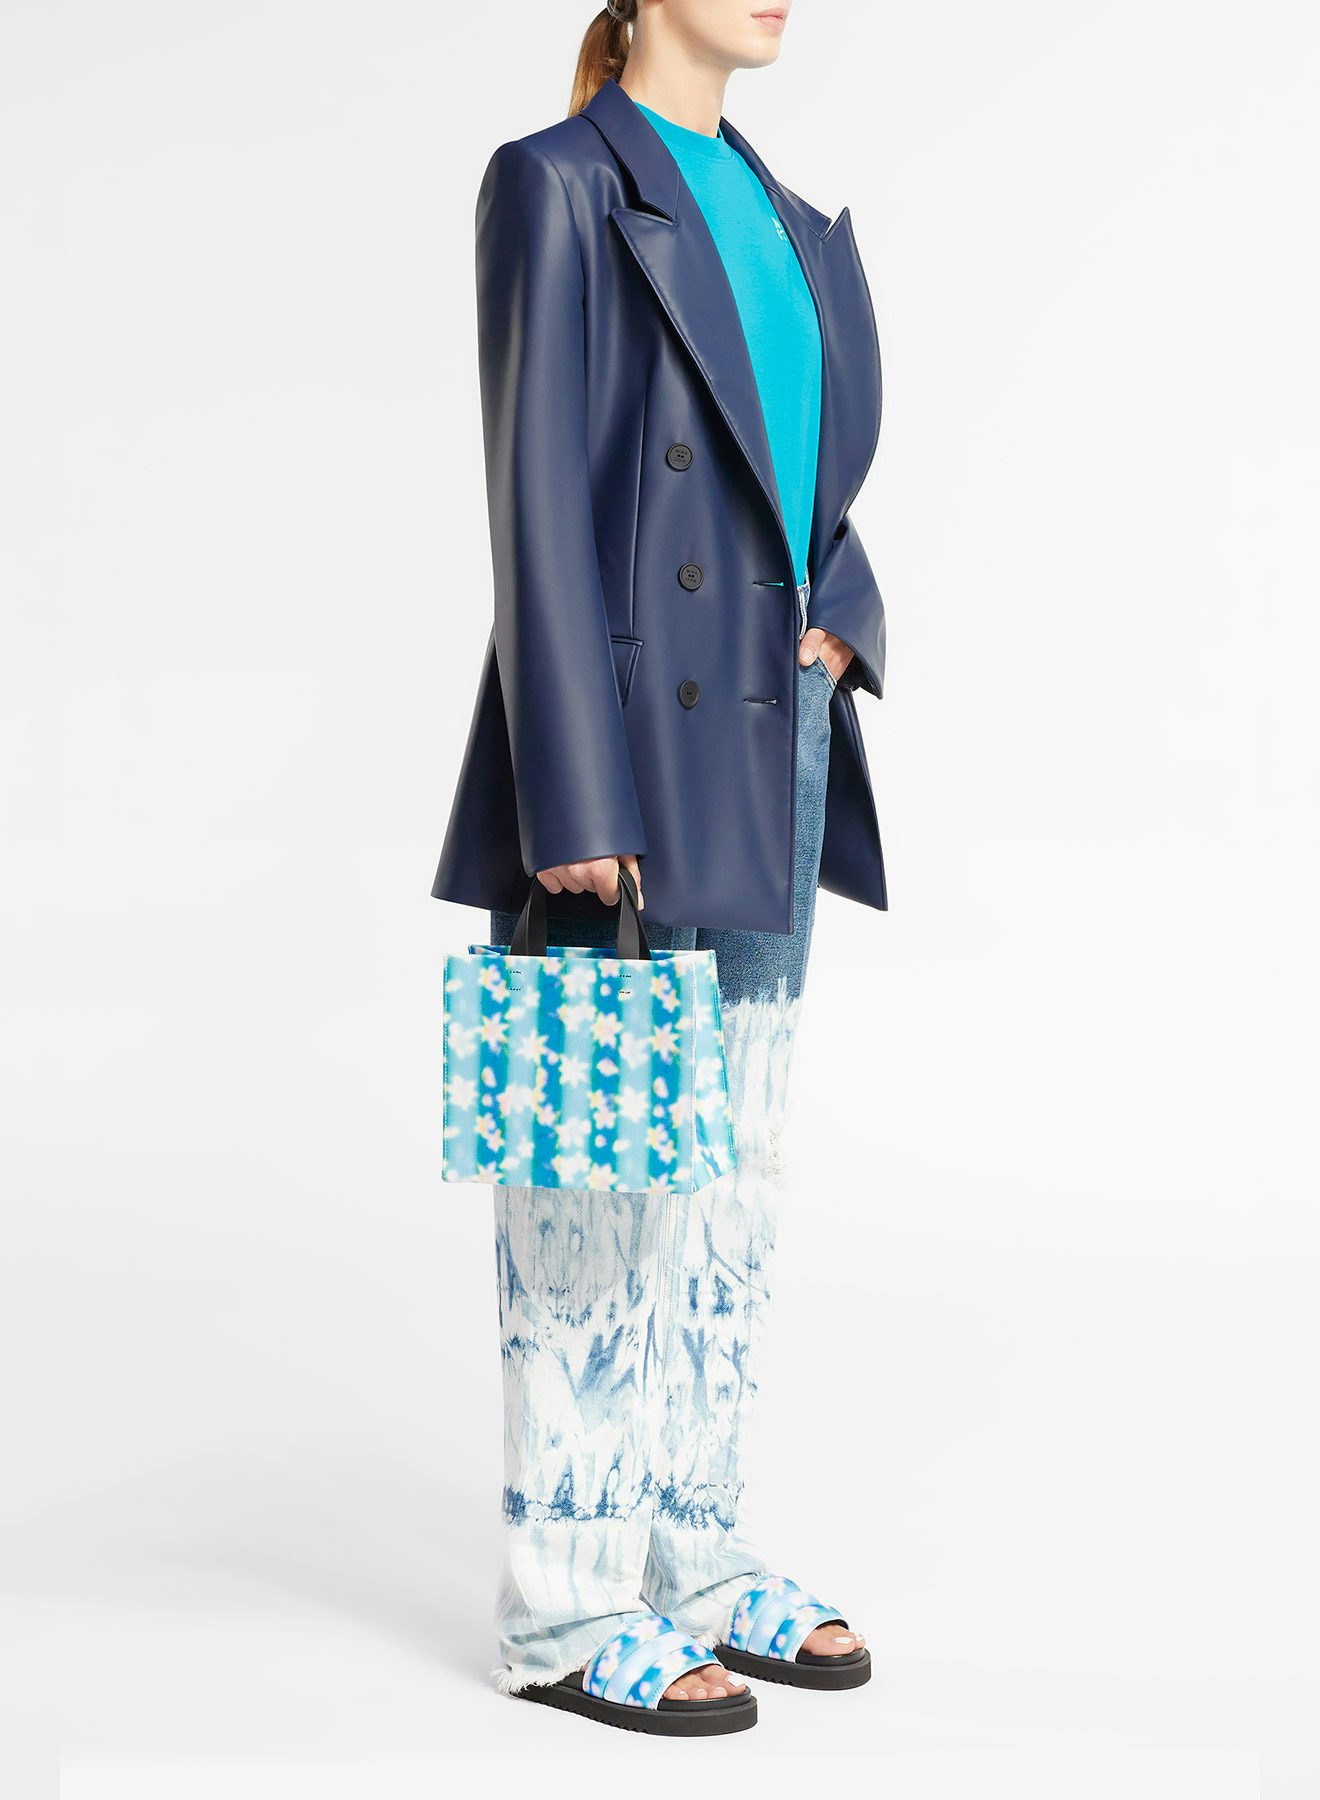 Medium neoprene tote bag with removable shoulder strap in lilac floral print - Nina Ricci